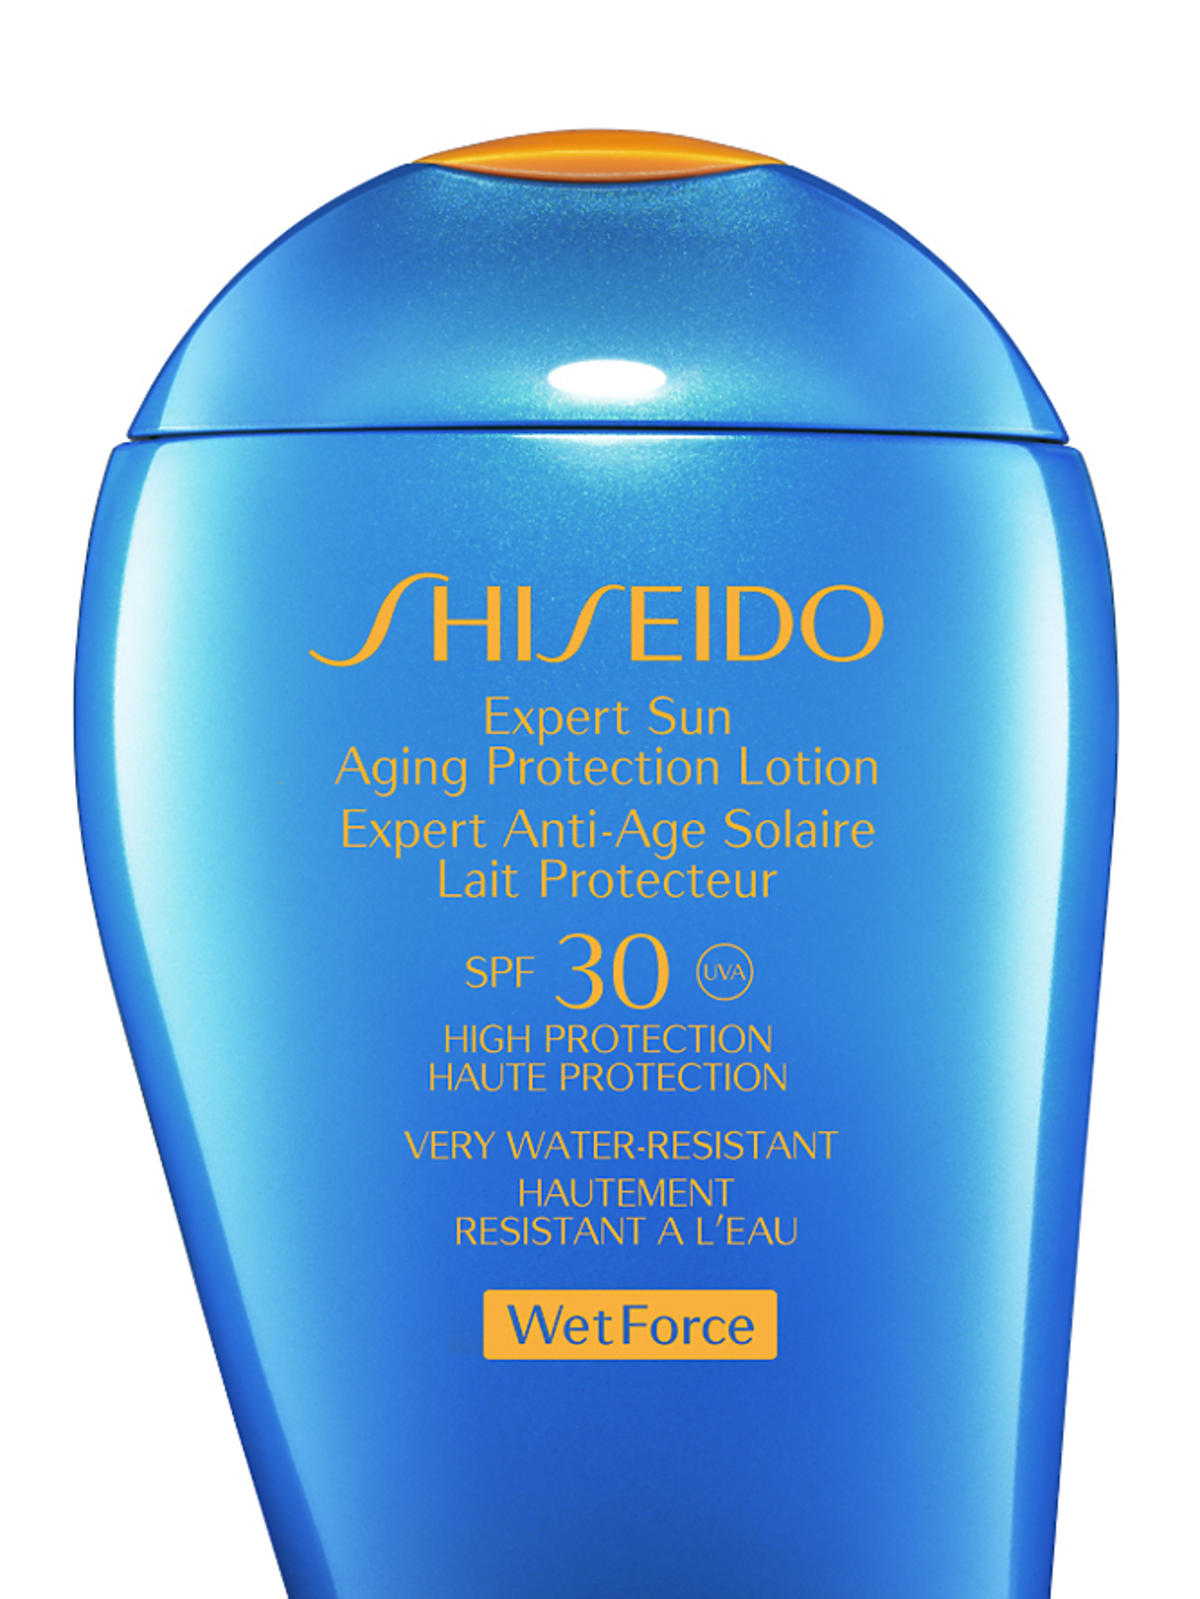 Balsam do opalania Expert Sun Aging Protection Lotion Plus SPF30+ Shiseido, 165zł